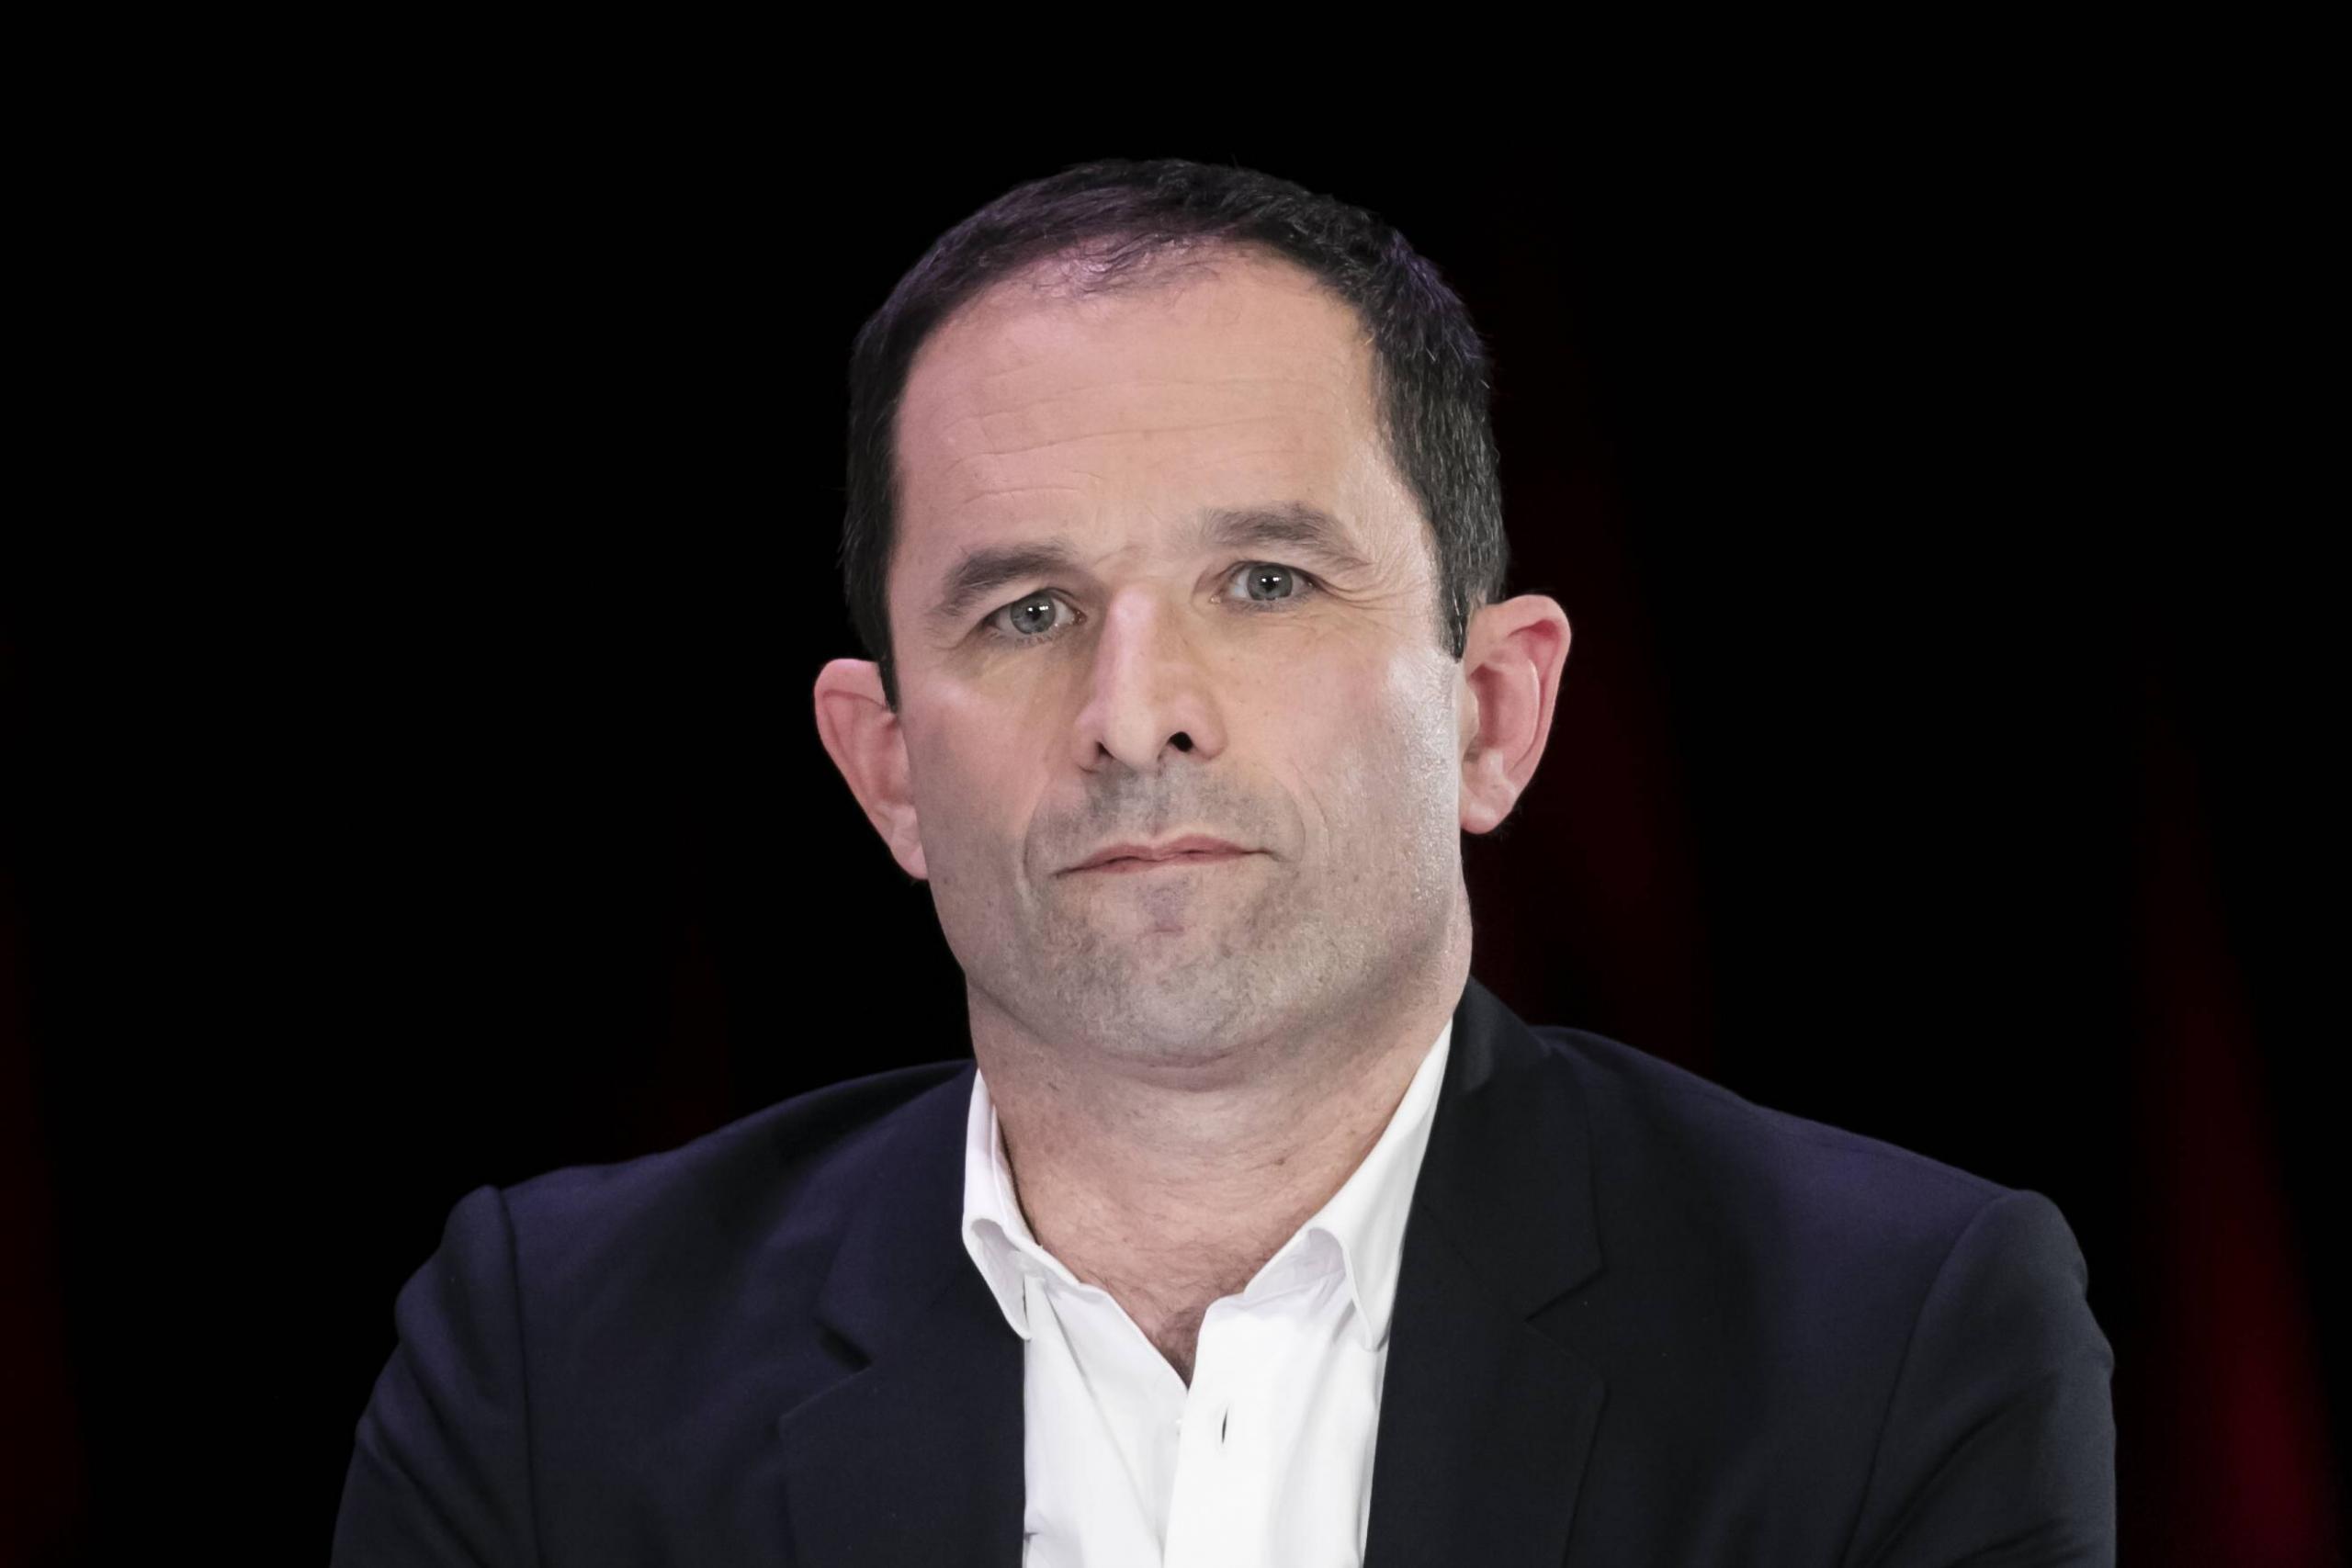 Benoît Hamon am 11. April 2017 in Paris.